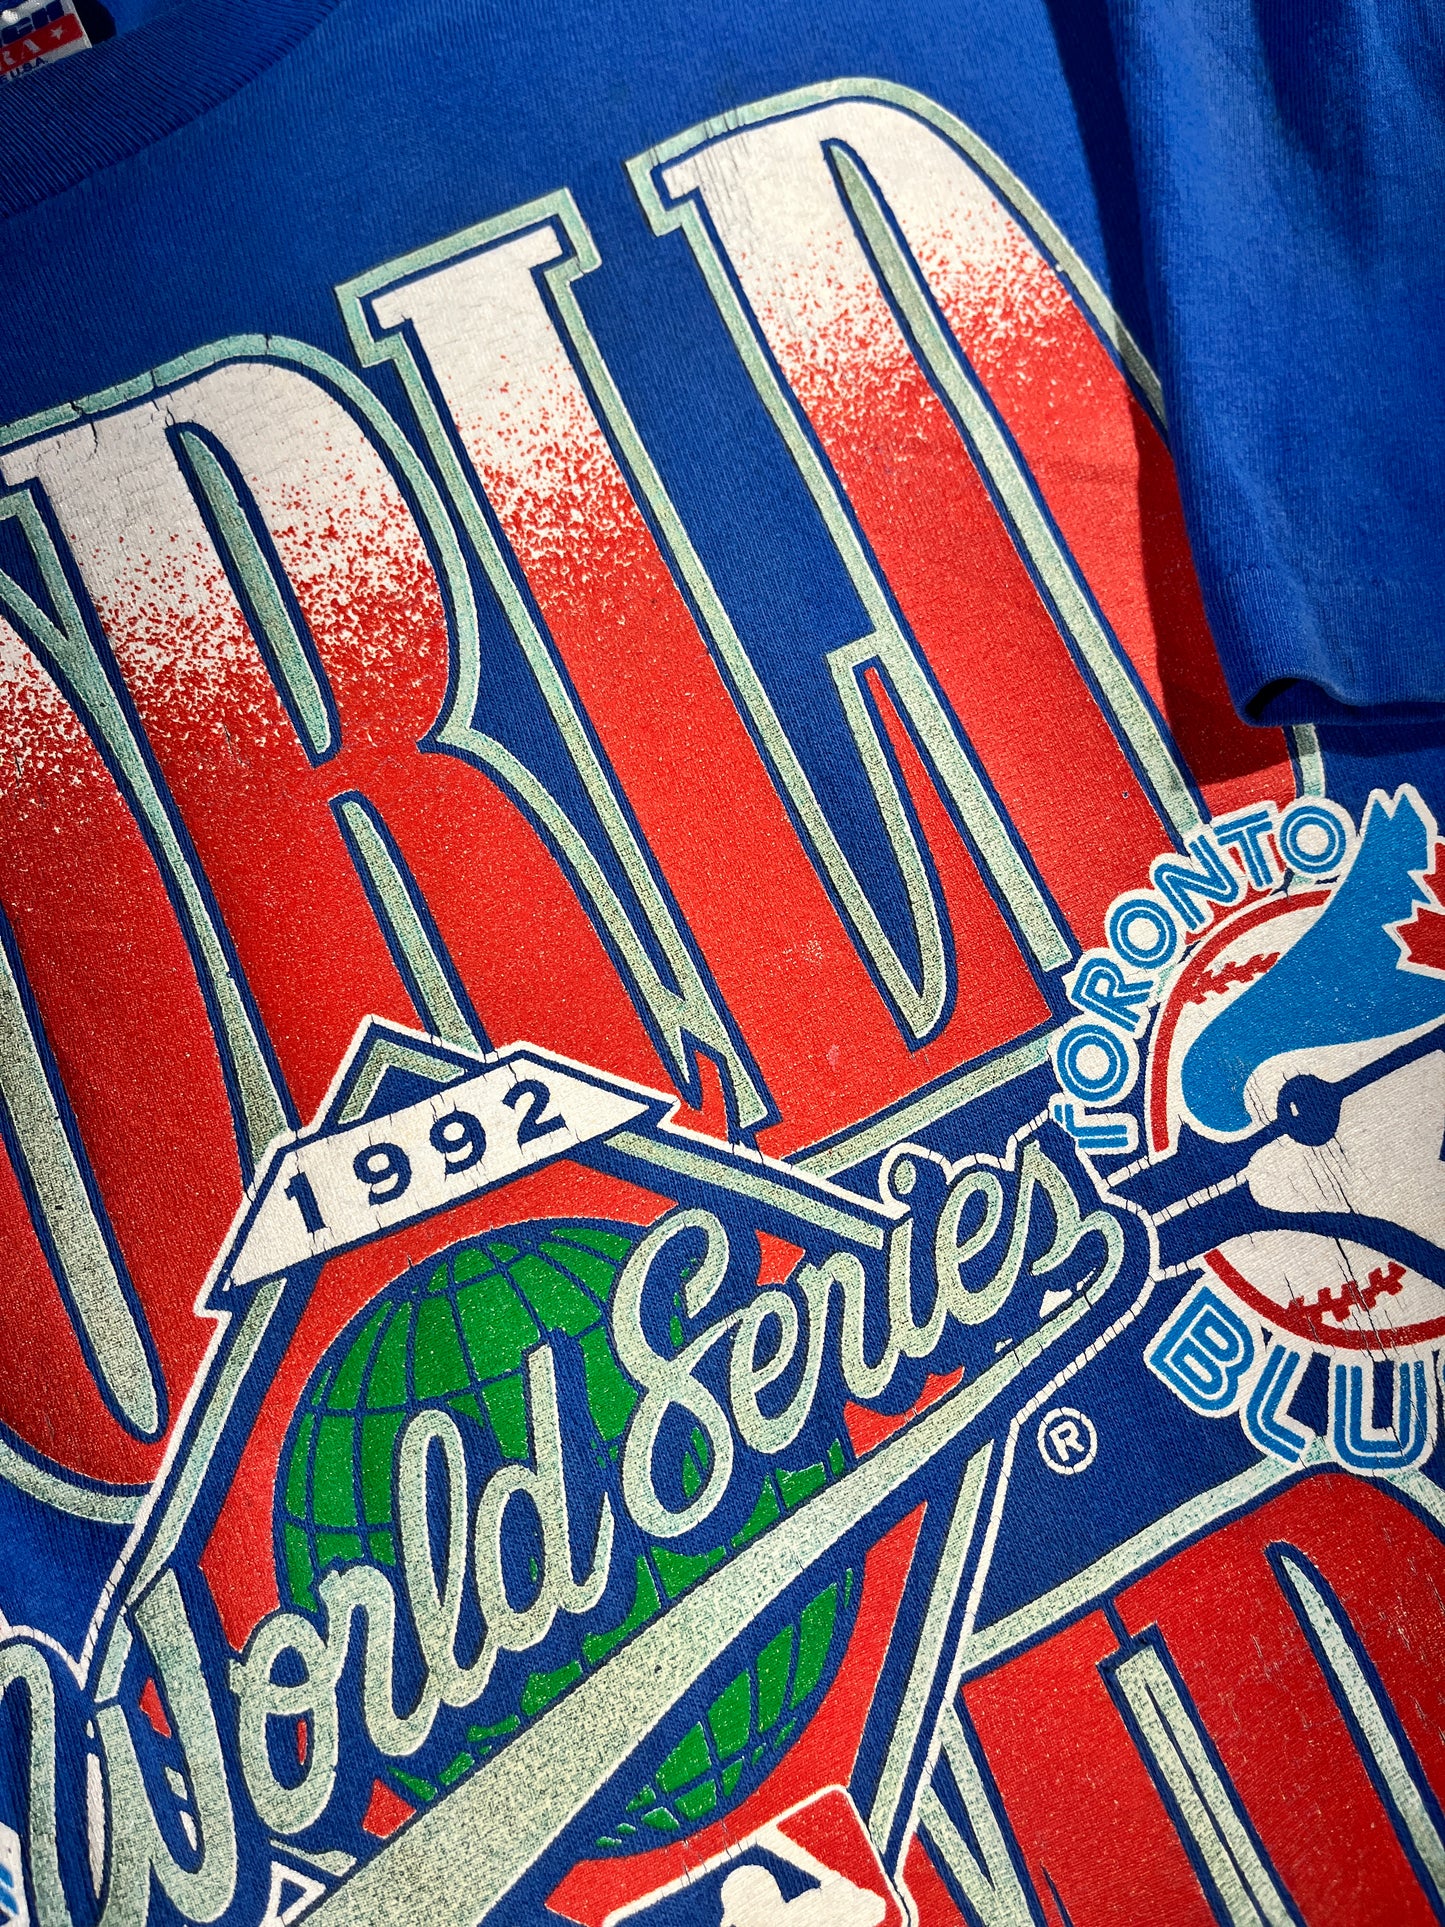 Vintage Toronto Blue Jays T-Shirt 1992 World Champs MLB USA Made